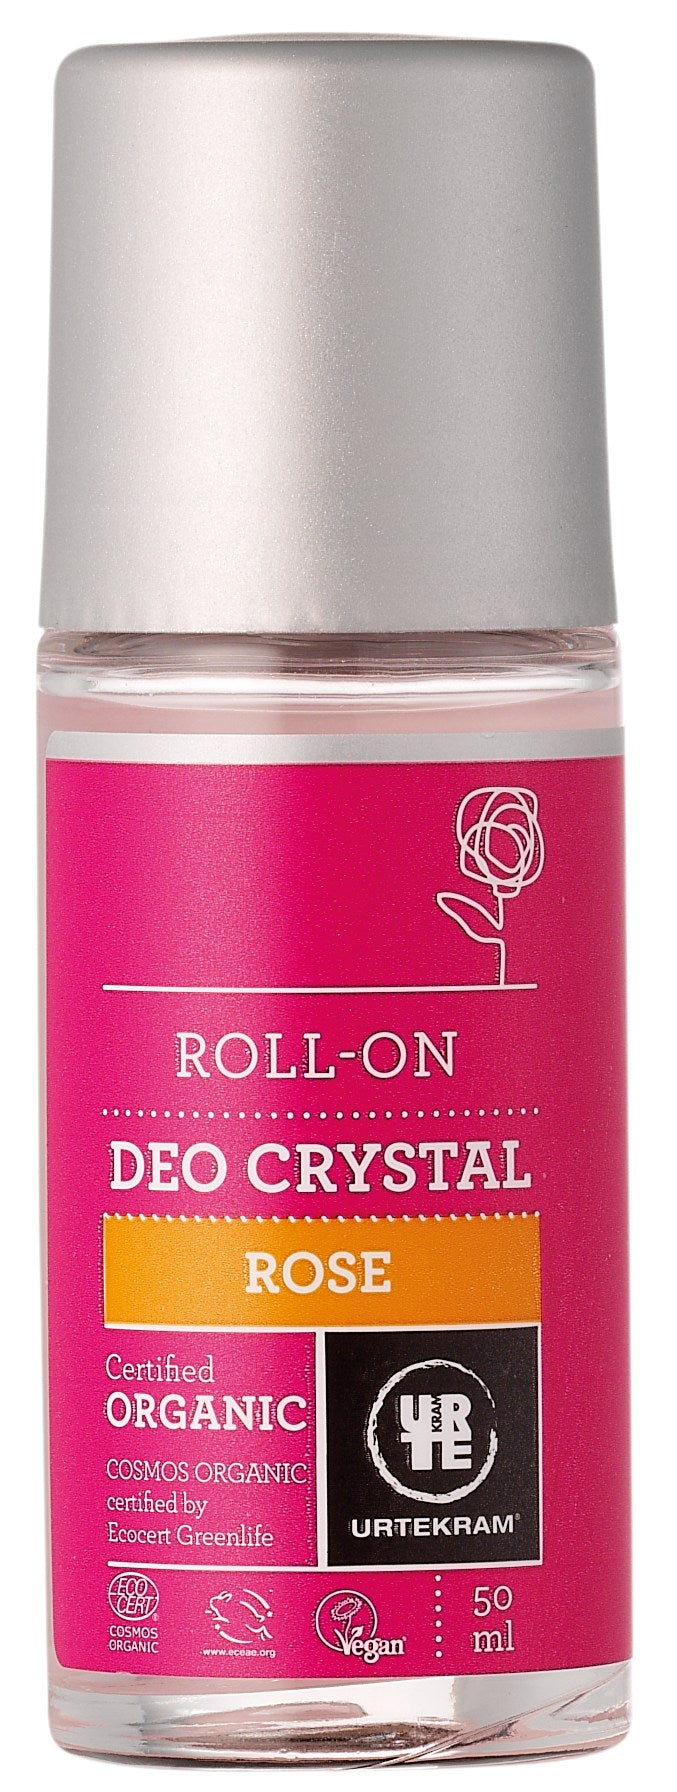 Urtekram Natural Deodorant - ROSE CRYSTAL ROLL ON - Preservative & Aluminium Chlorhydrate FREE, 50 ml